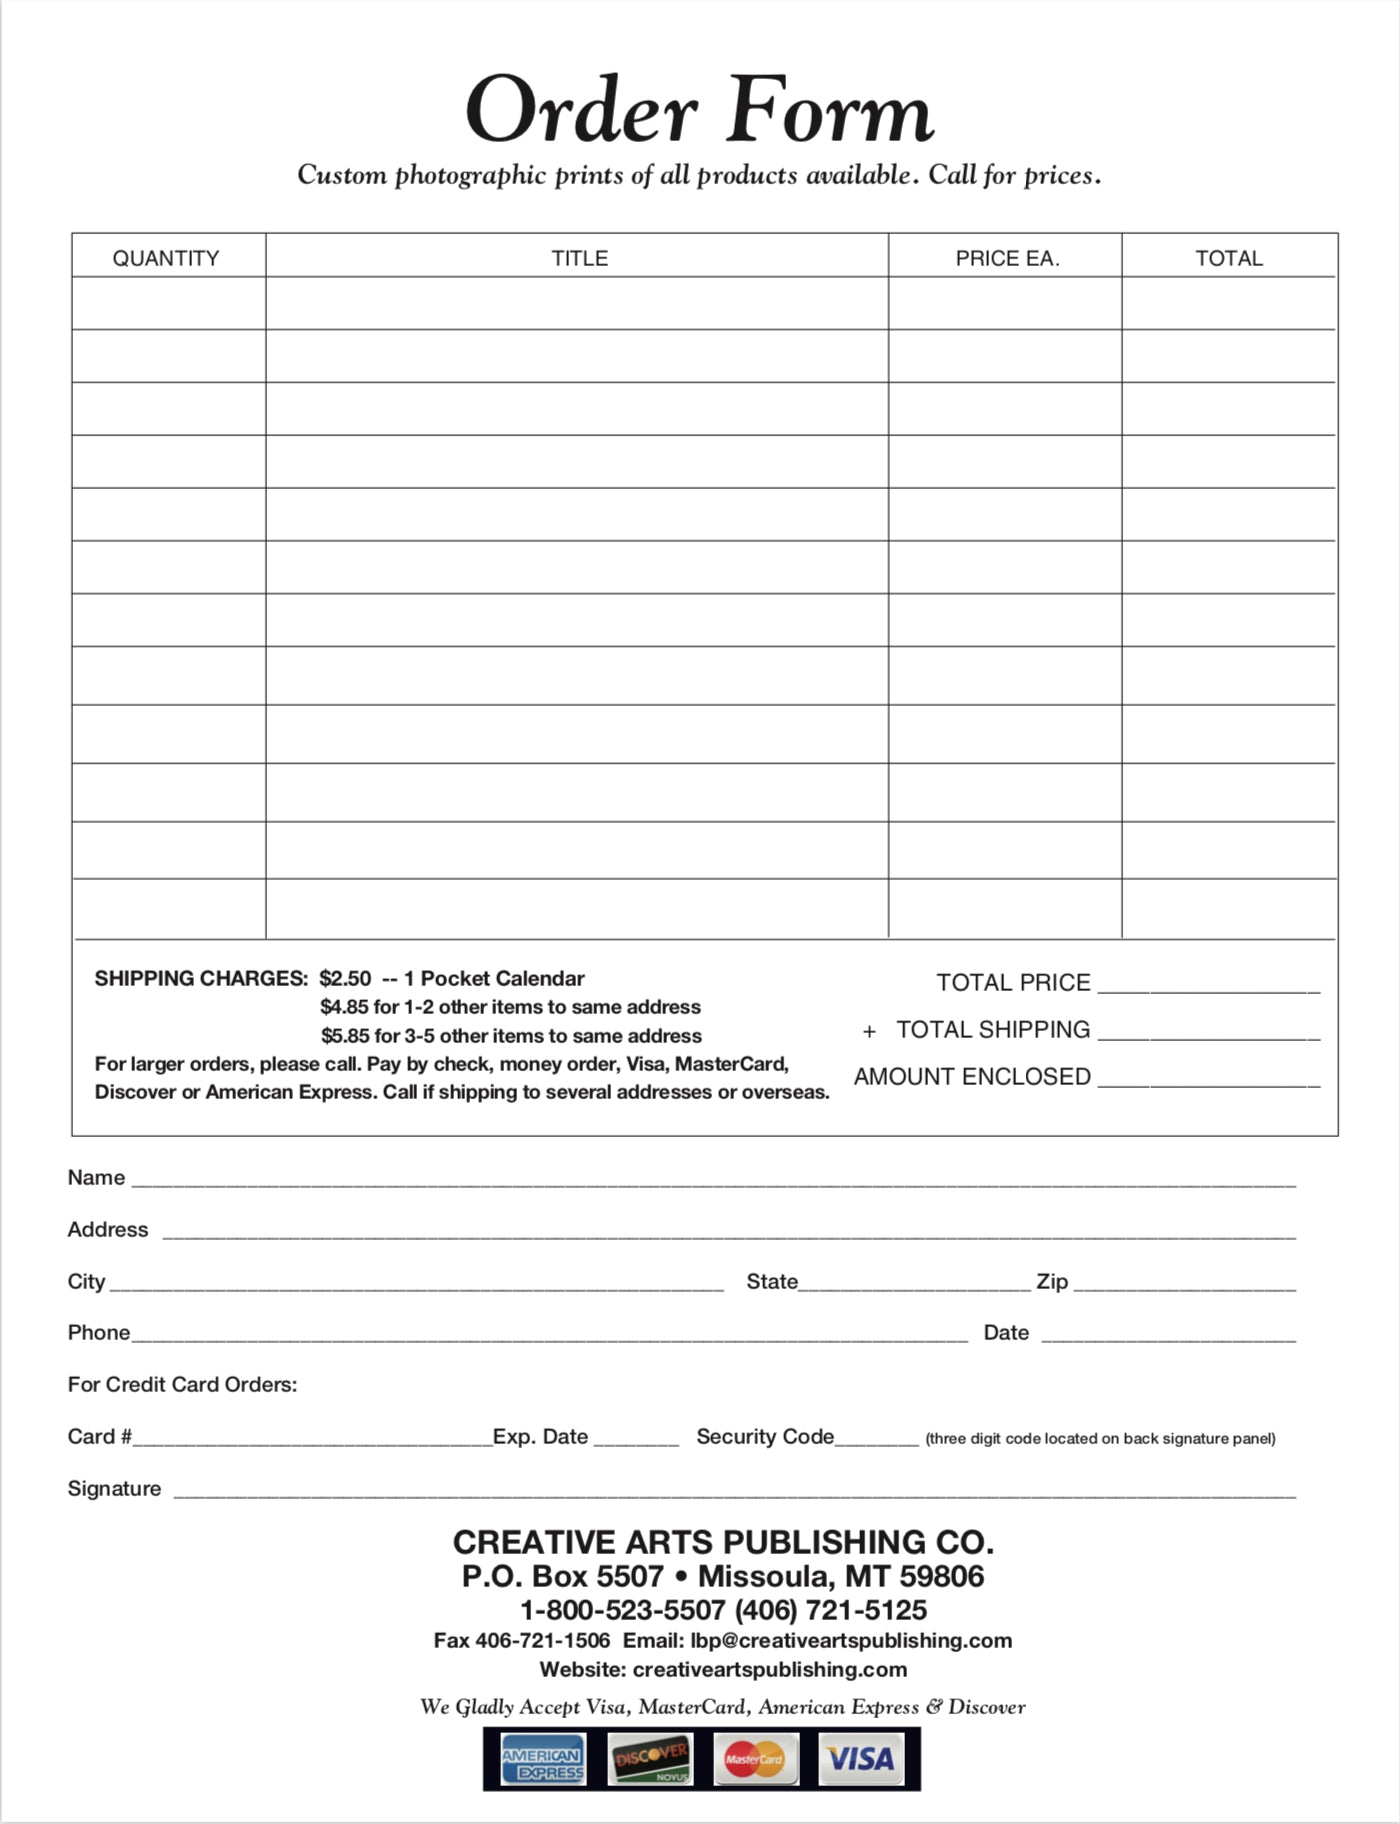 Easy Free Printable Order Form - Printable Forms Free Online